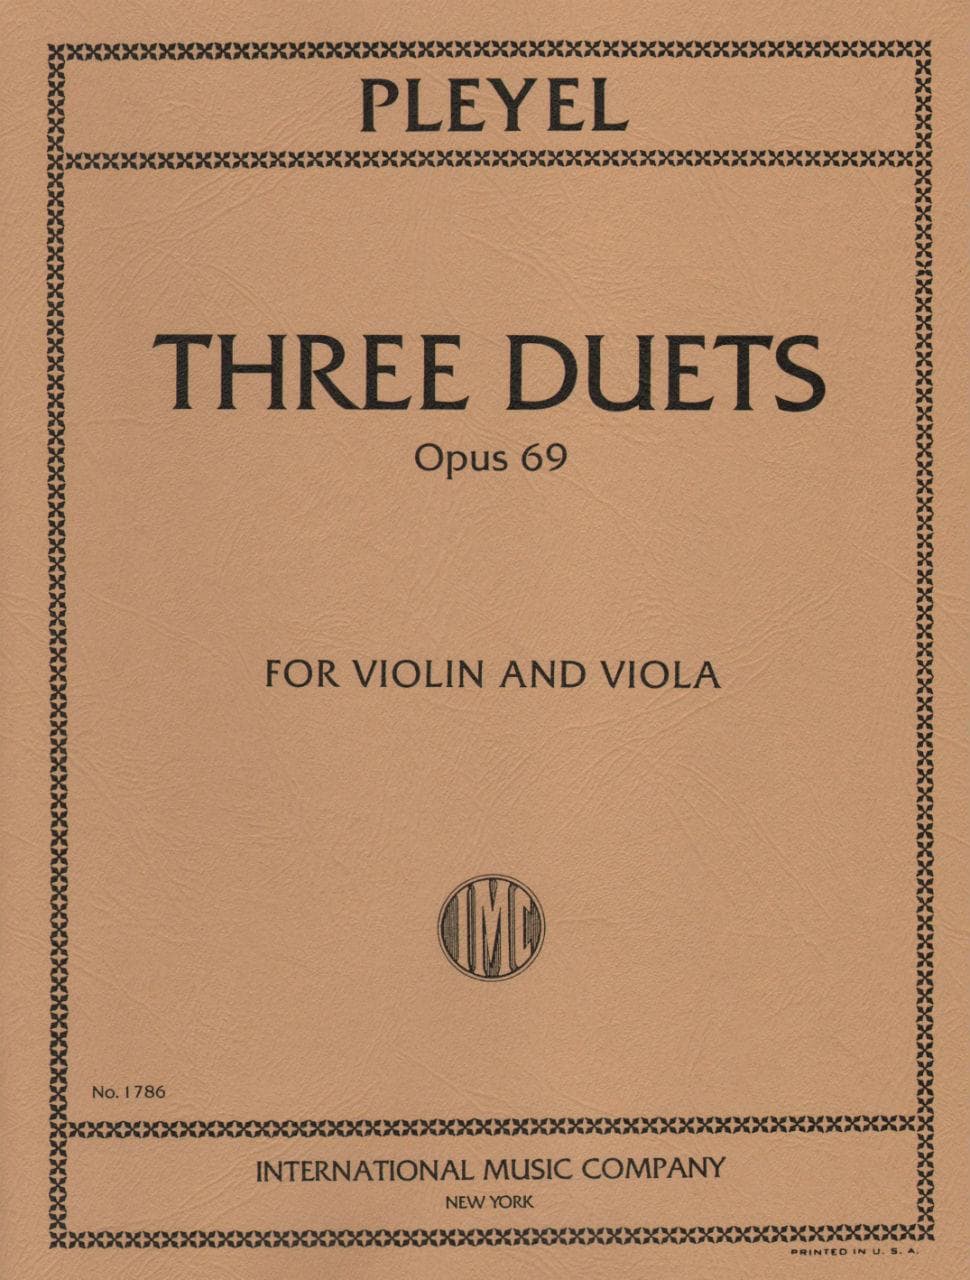 Pleyel, Ignace Joseph - Three Duets  Op 69 B 526-528 For Violin and Viola Published by International Music Company